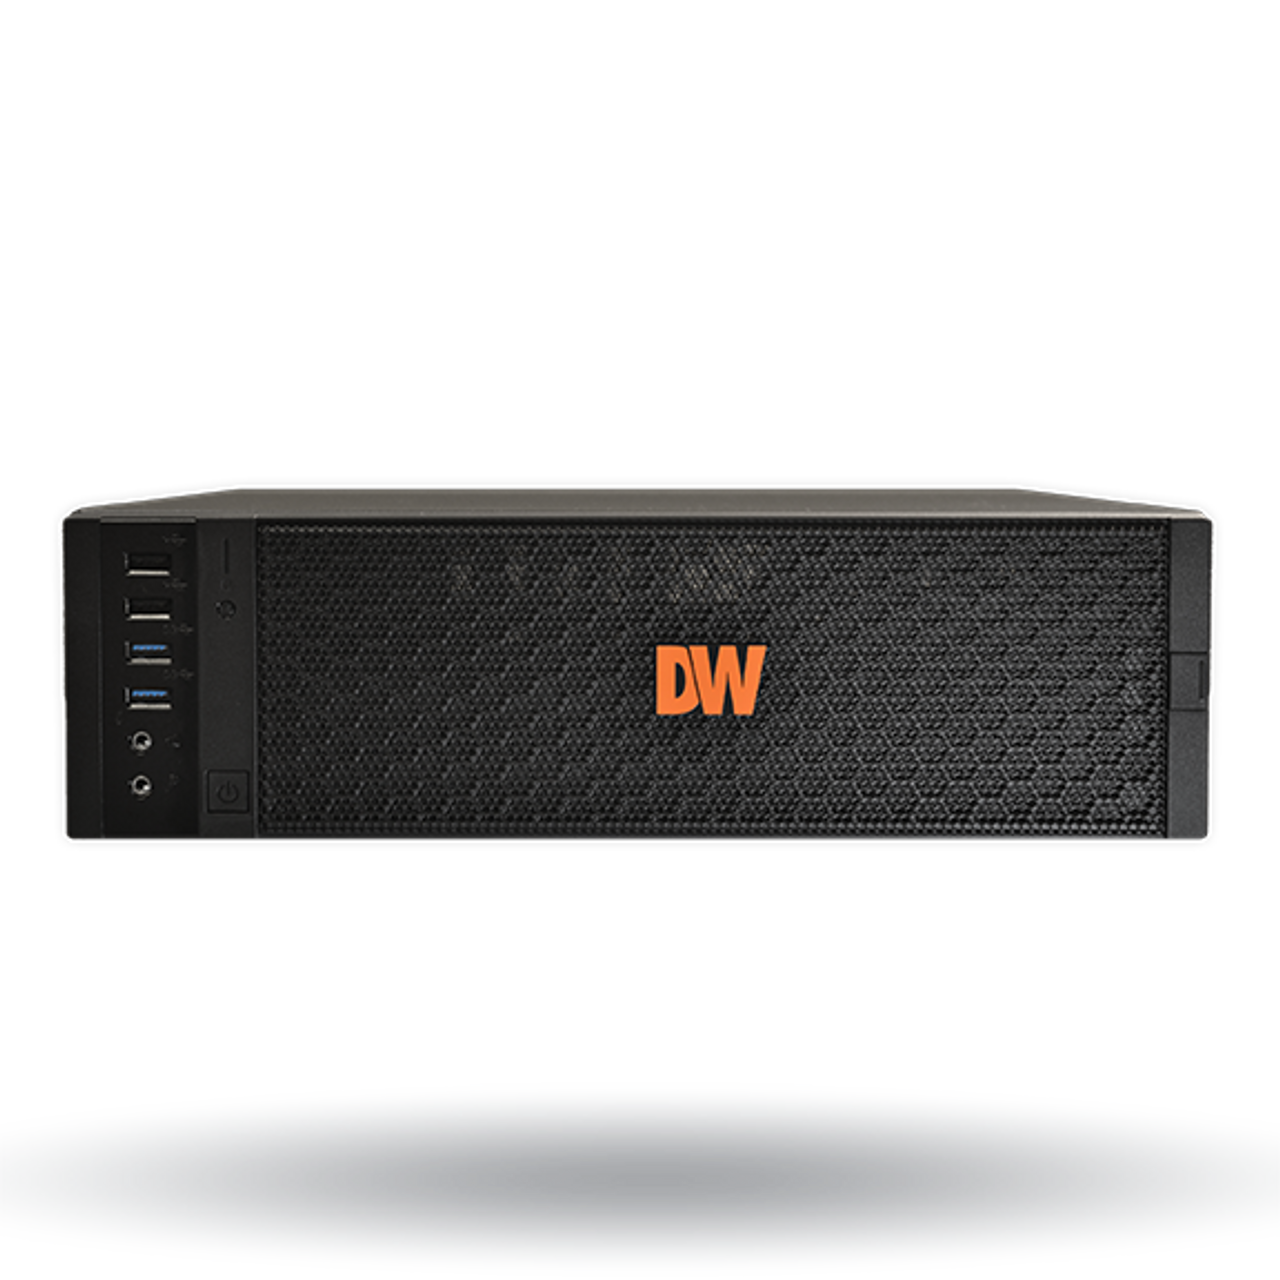 Digital Watchdog DW-BJDX3120T 180Mbps Desktop Video Server, i3 CPU, Windows 10 OS, 20TB HDD, NDAA Compliant